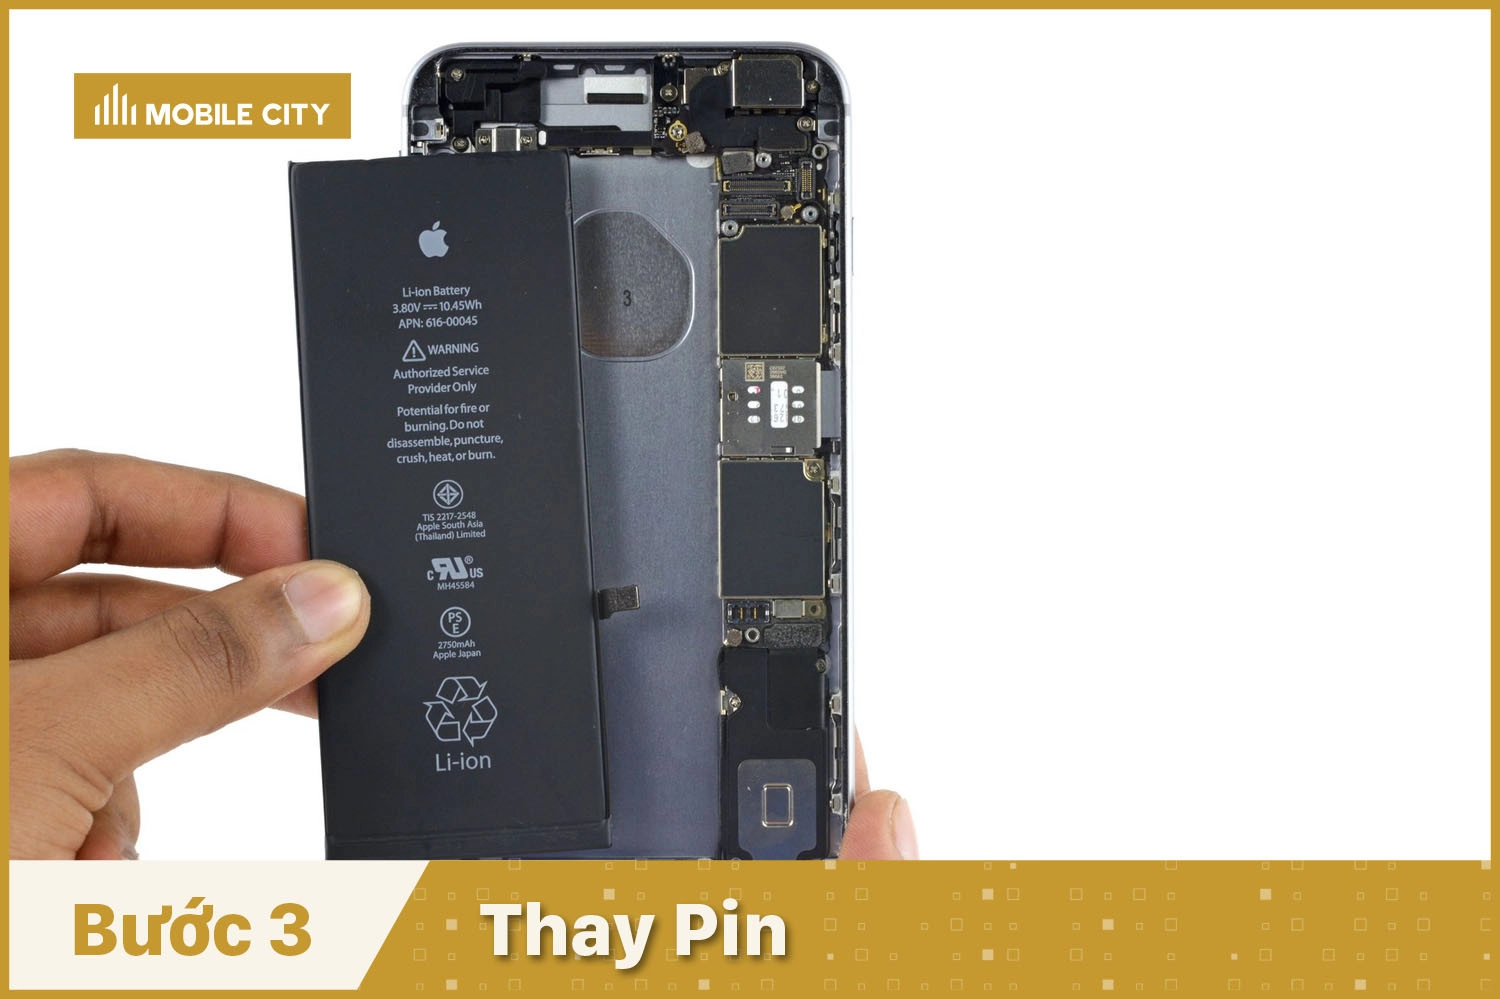 Thay Pin Pisen cho iPhone